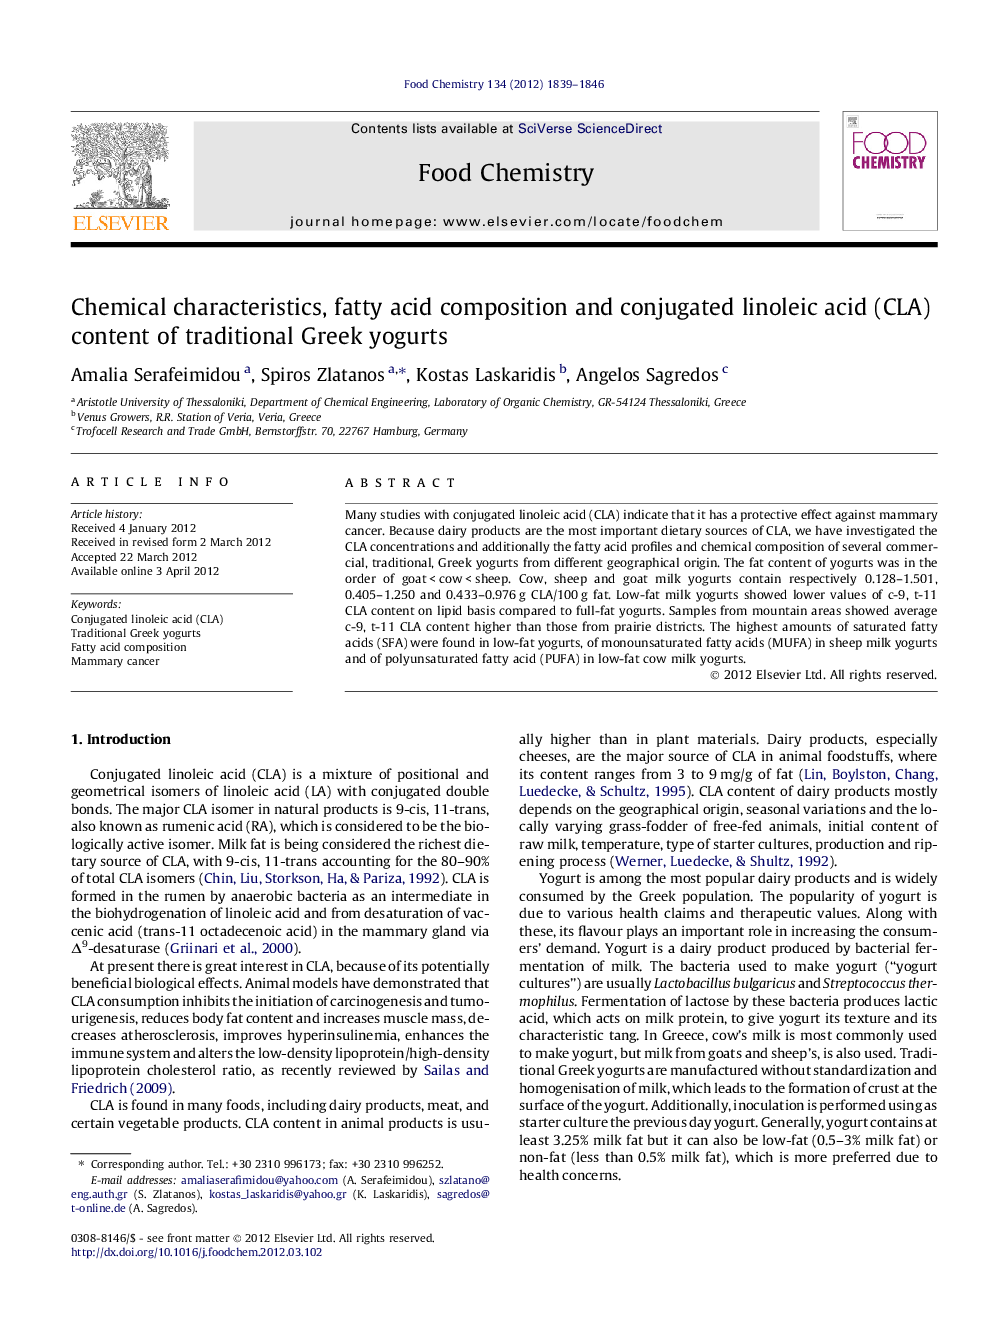 Chemical characteristics, fatty acid composition and conjugated linoleic acid (CLA) content of traditional Greek yogurts